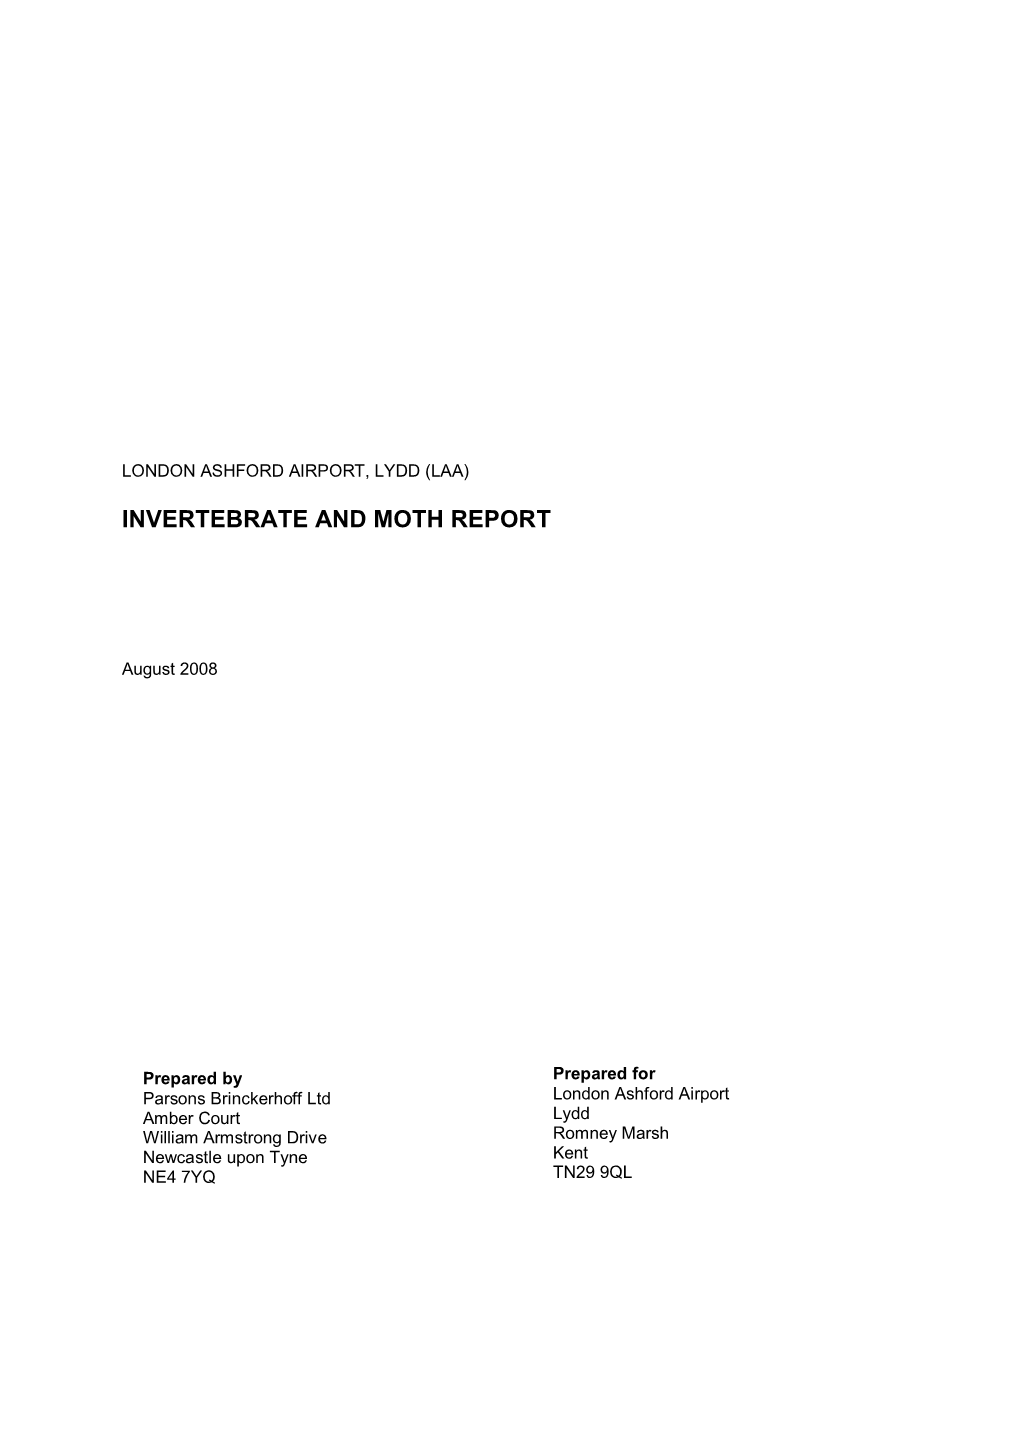 Invertebrate and Moth Report